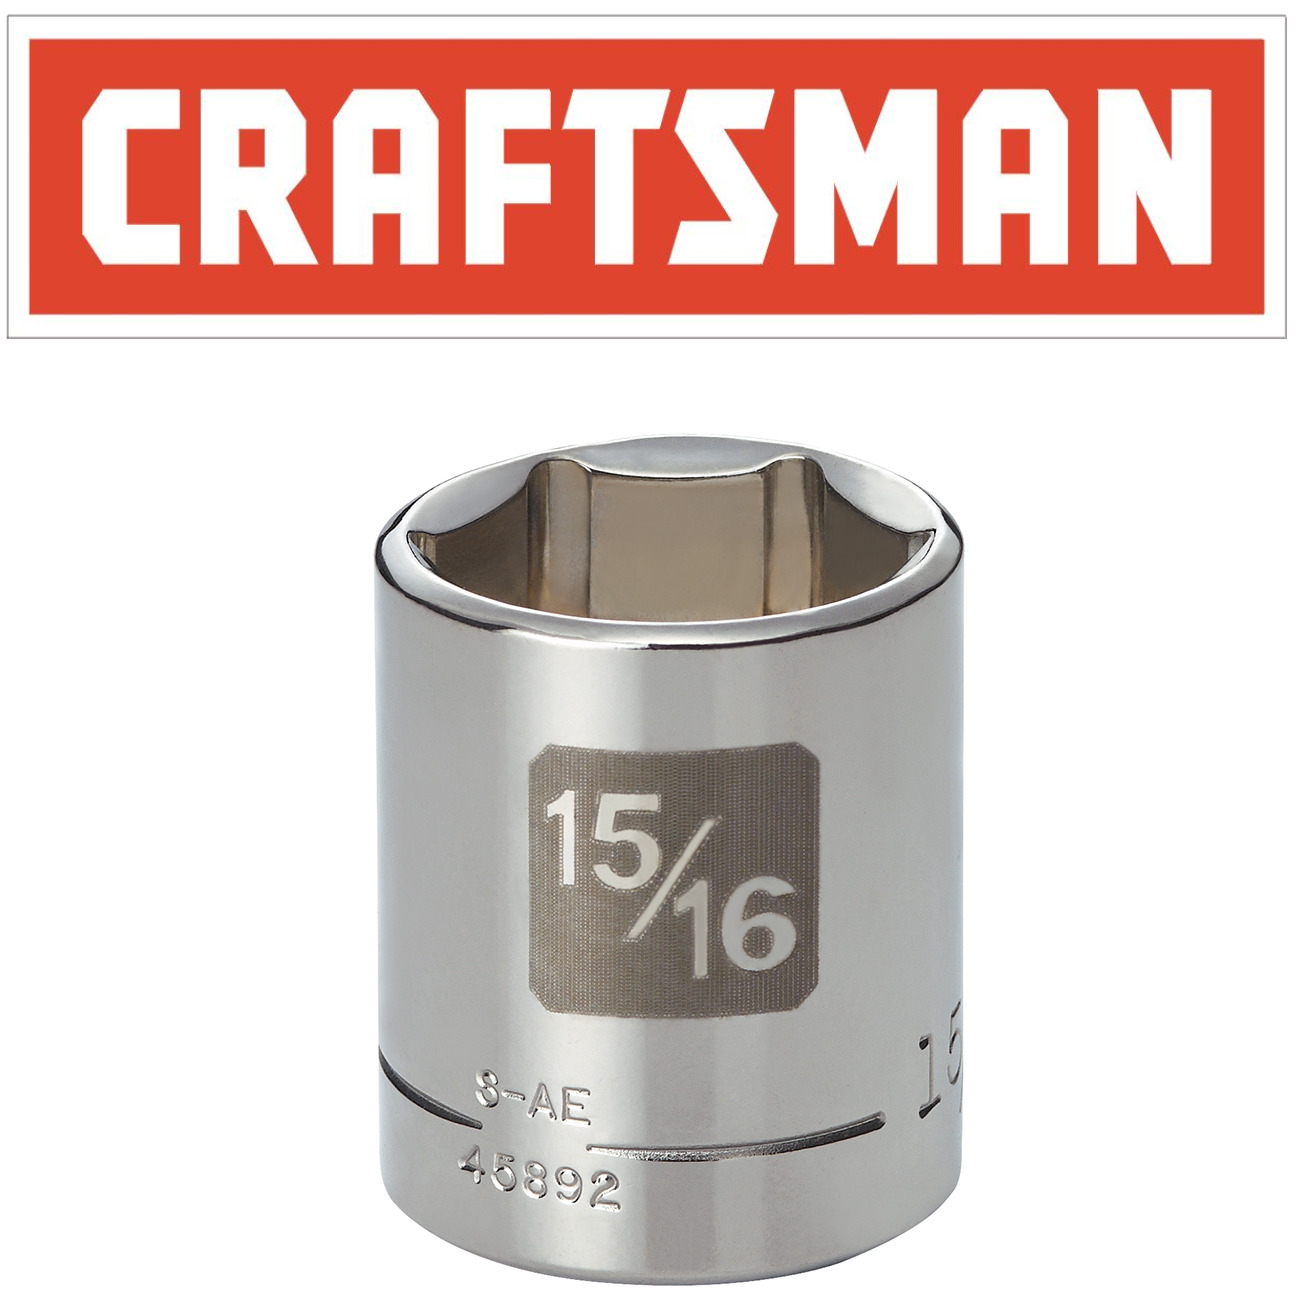 Craftsman Easy Read Socket 1/2 or 3/8